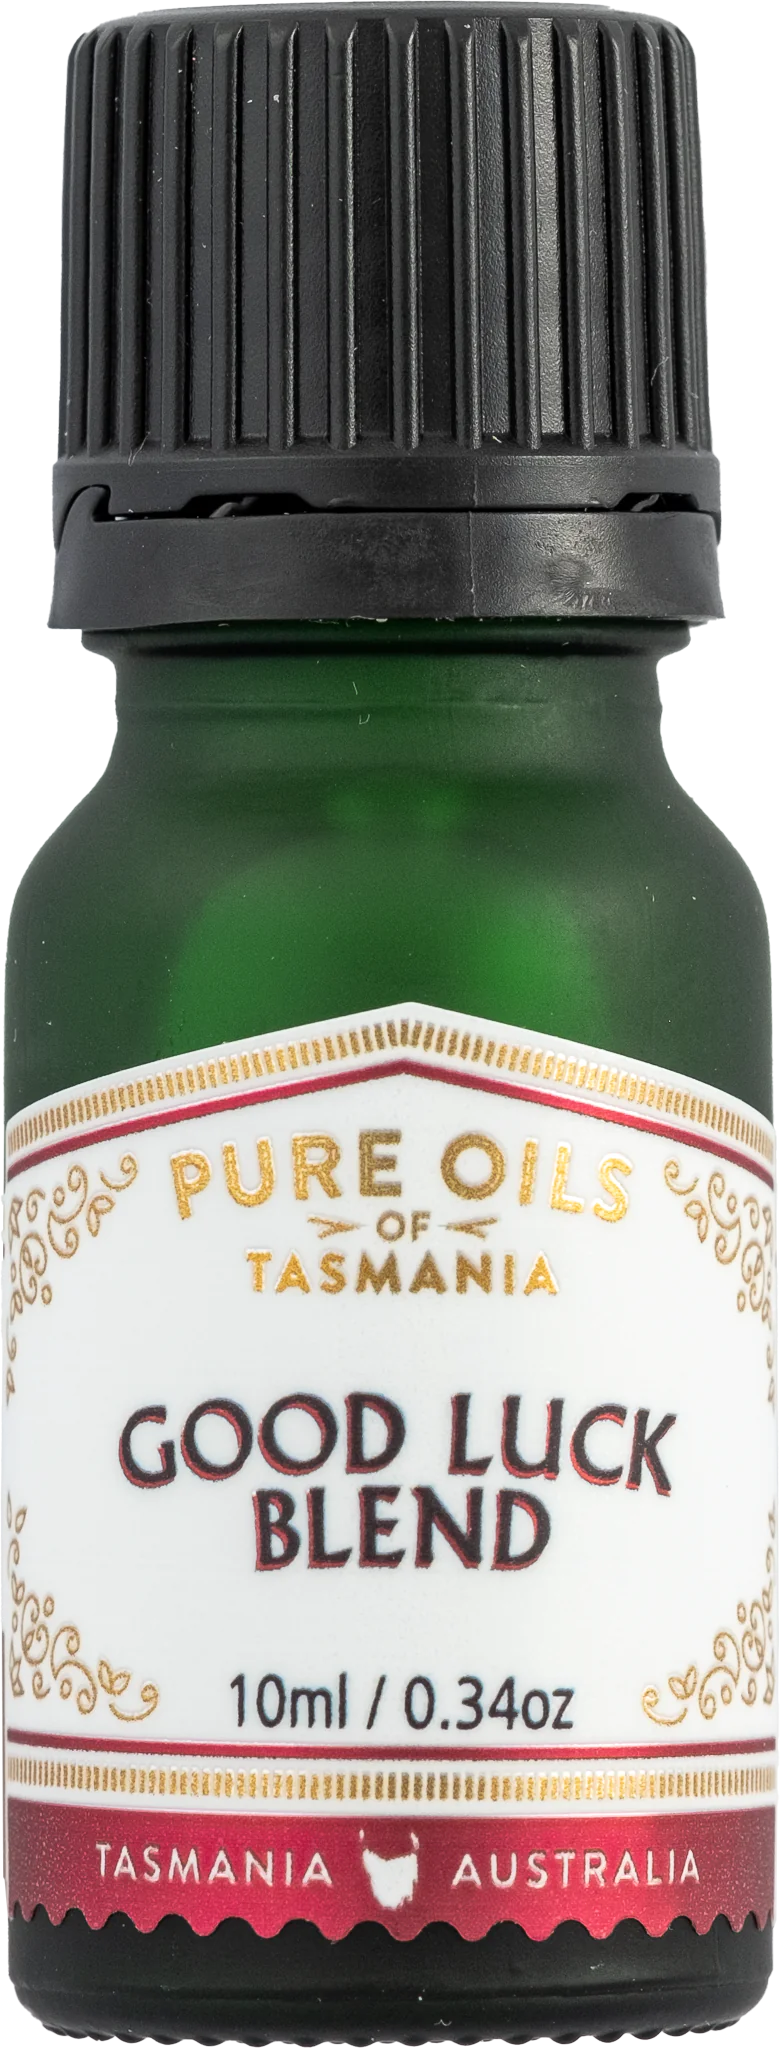 Pure Oil Blends - Pure Oils of Tasmania Body pure oils tasmania Good Luck Blend 